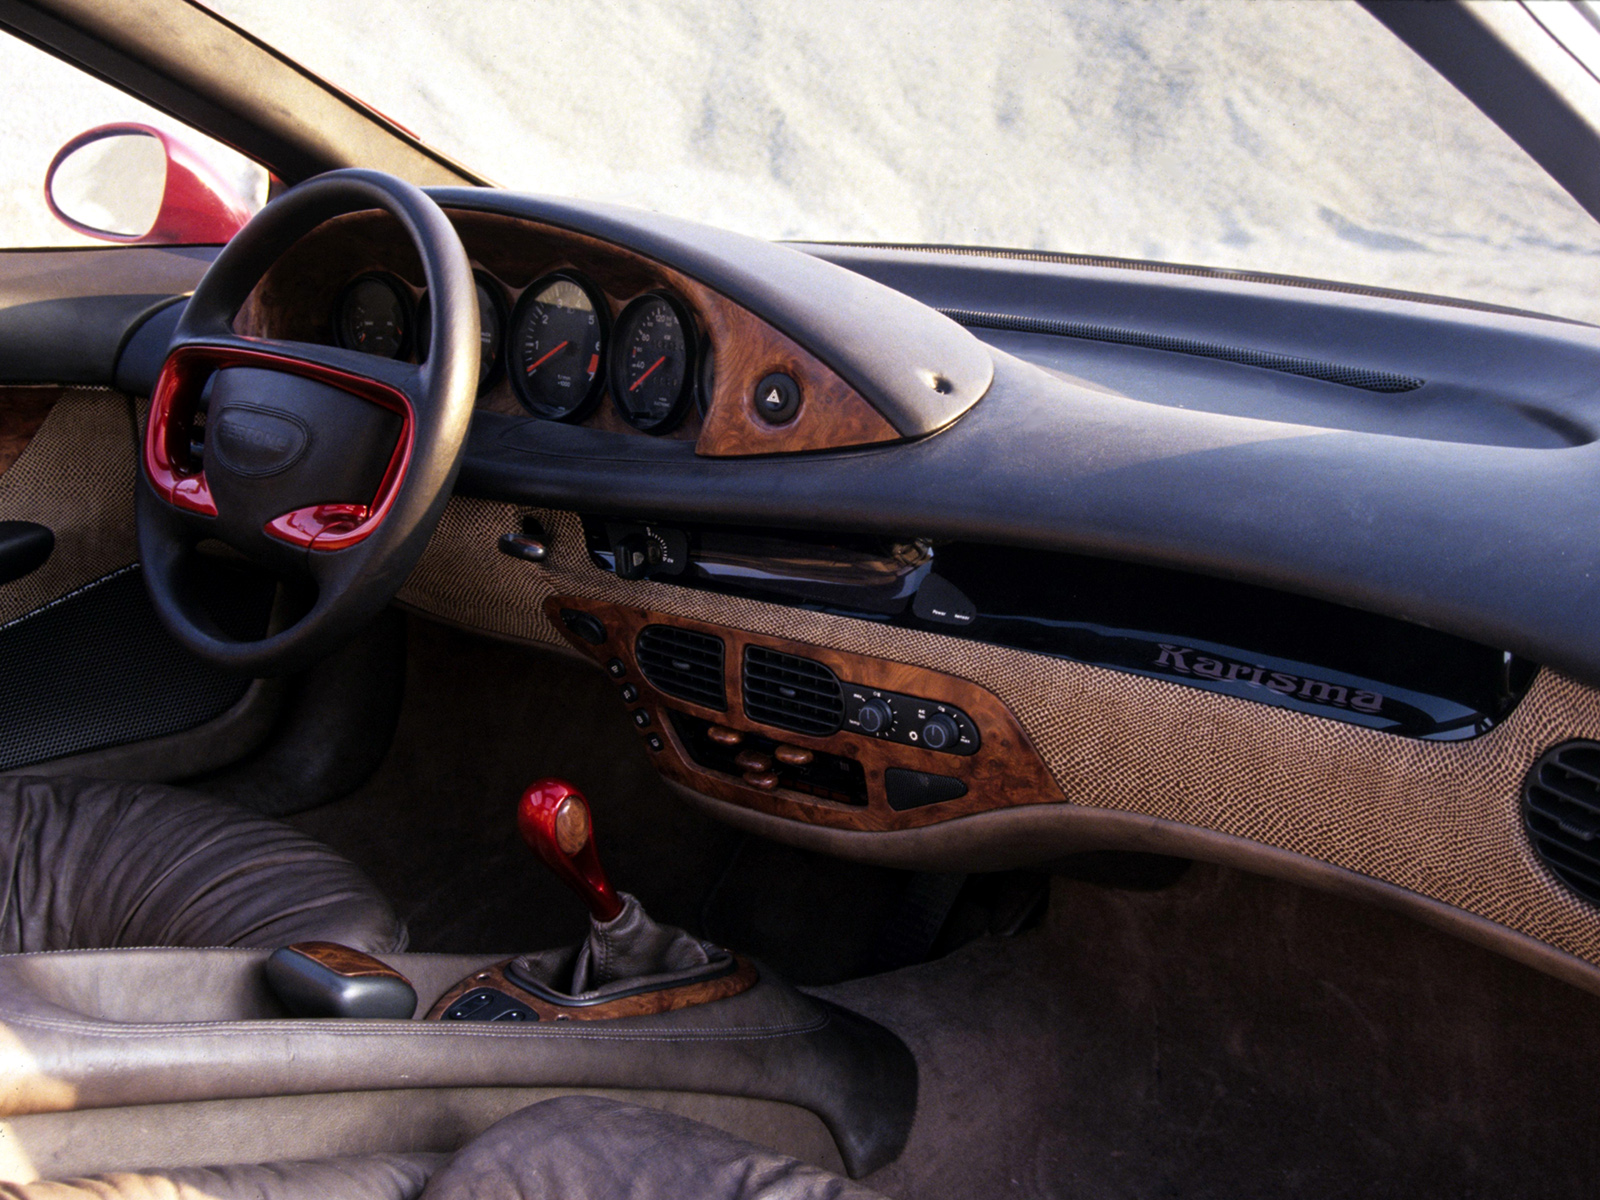 Porsche Karisma (Bertone), 1994 - Interior